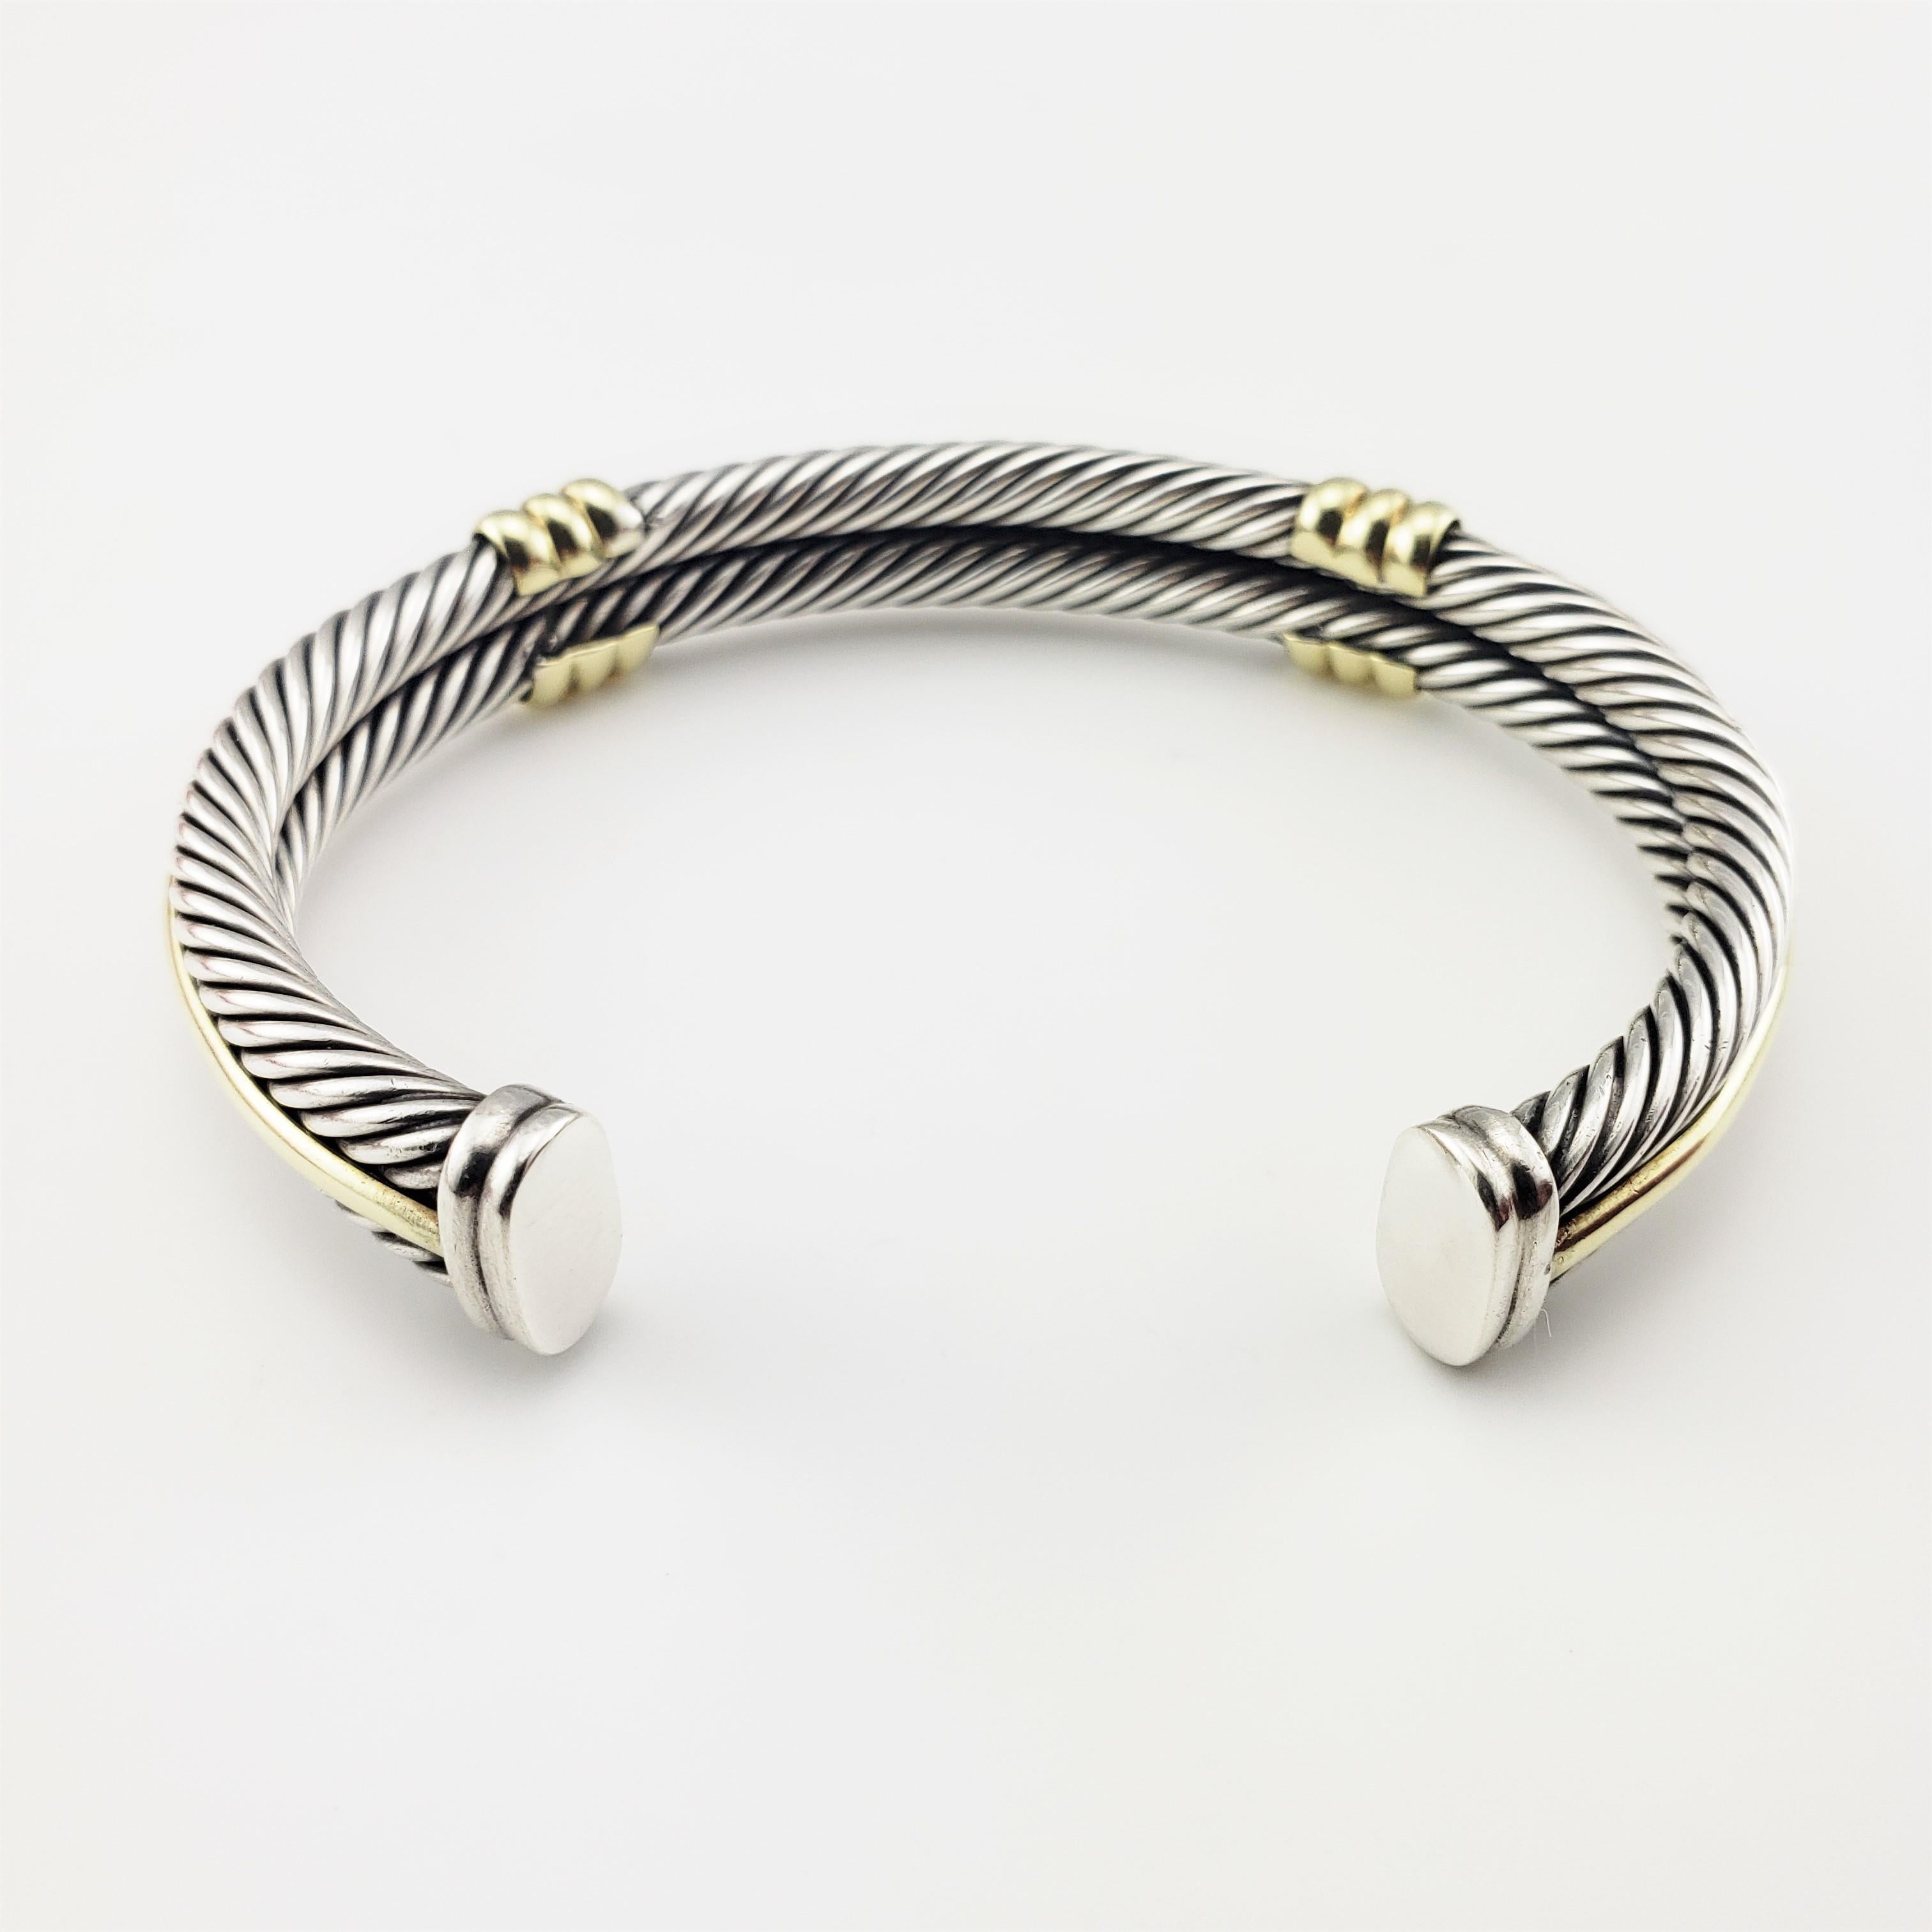 Women's or Men's David Yurman Sterling Silver and 14 Karat Yellow Gold Cable Cuff Bracelet